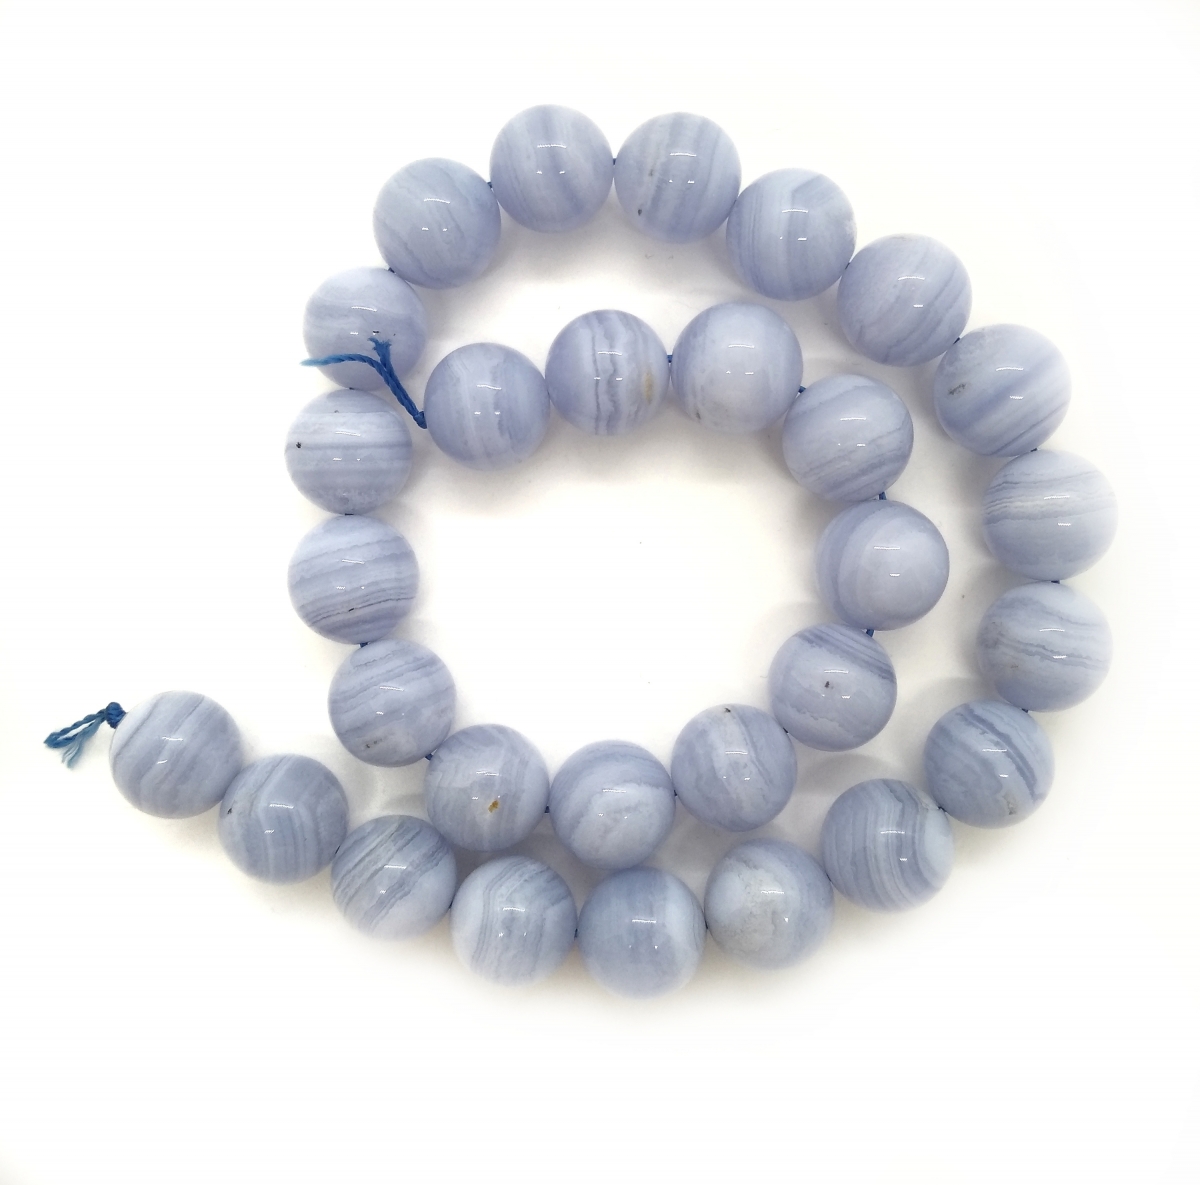 Бусины Агат голубой гладкий глянцевый шар 14мм натуральный камень